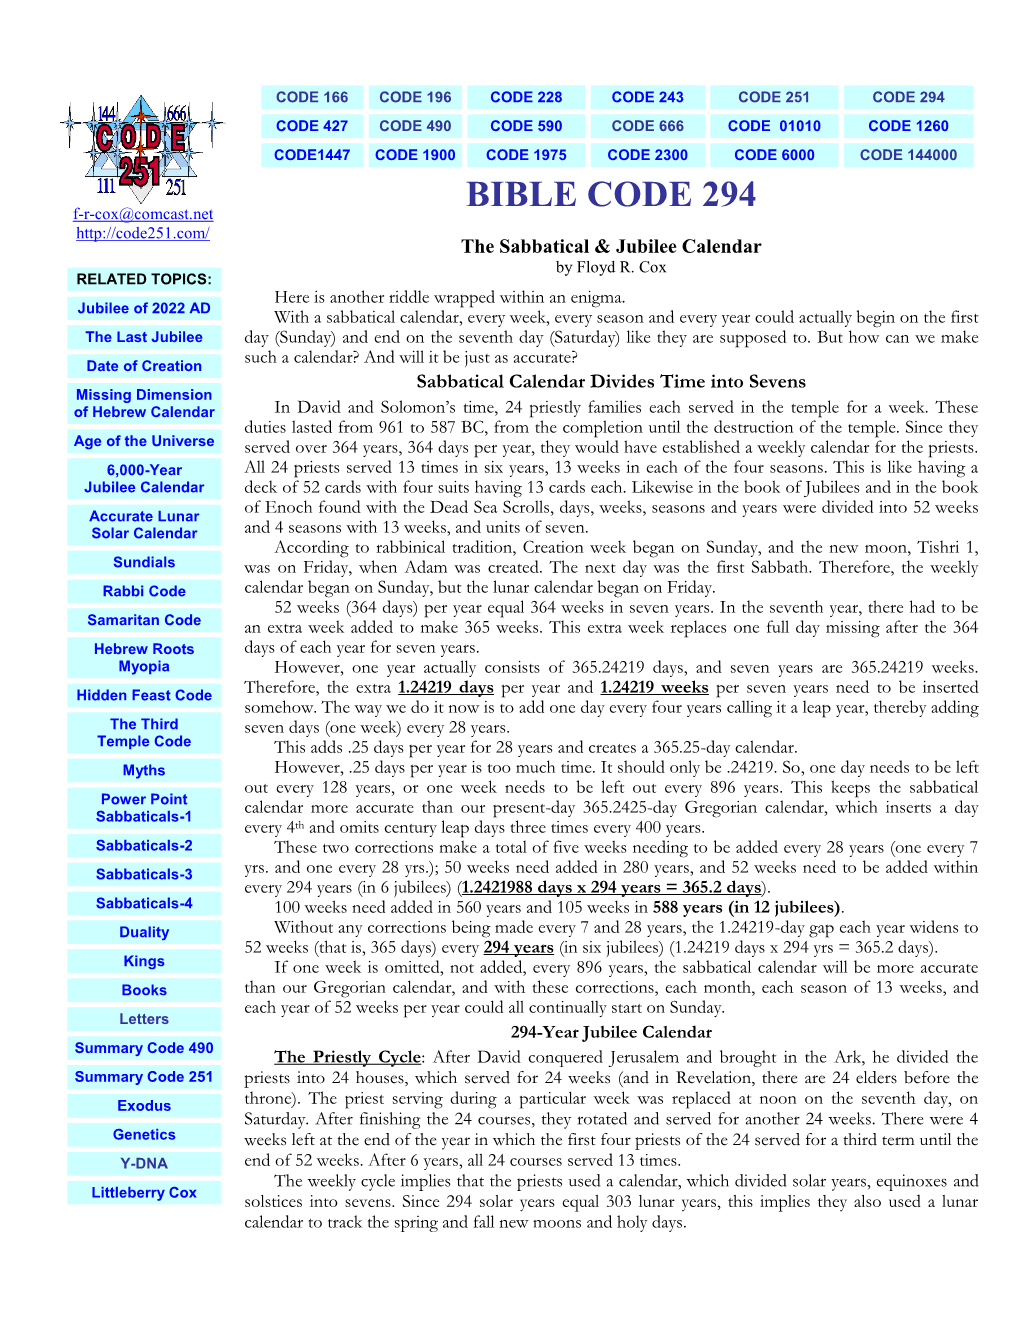 BIBLE CODE 294 F-R-Cox@Comcast.Net the Sabbatical & Jubilee Calendar by Floyd R